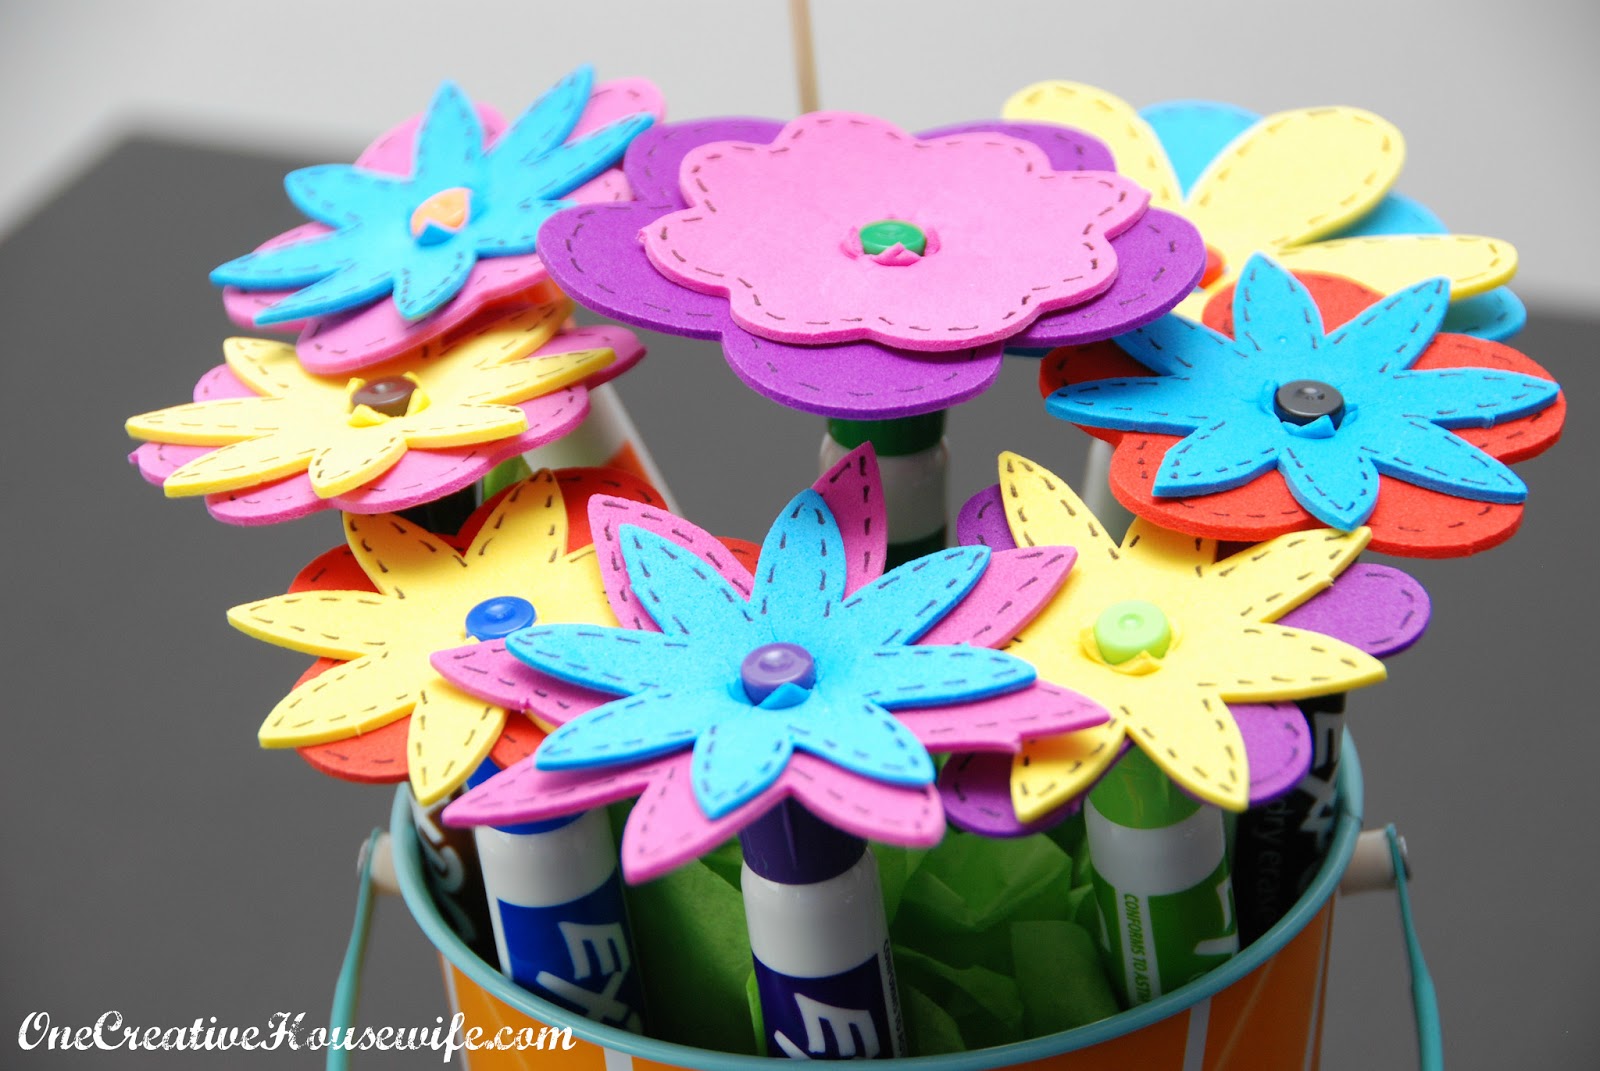 Dry Erase Marker Bouquet - Teacher Gift - The Happy Scraps